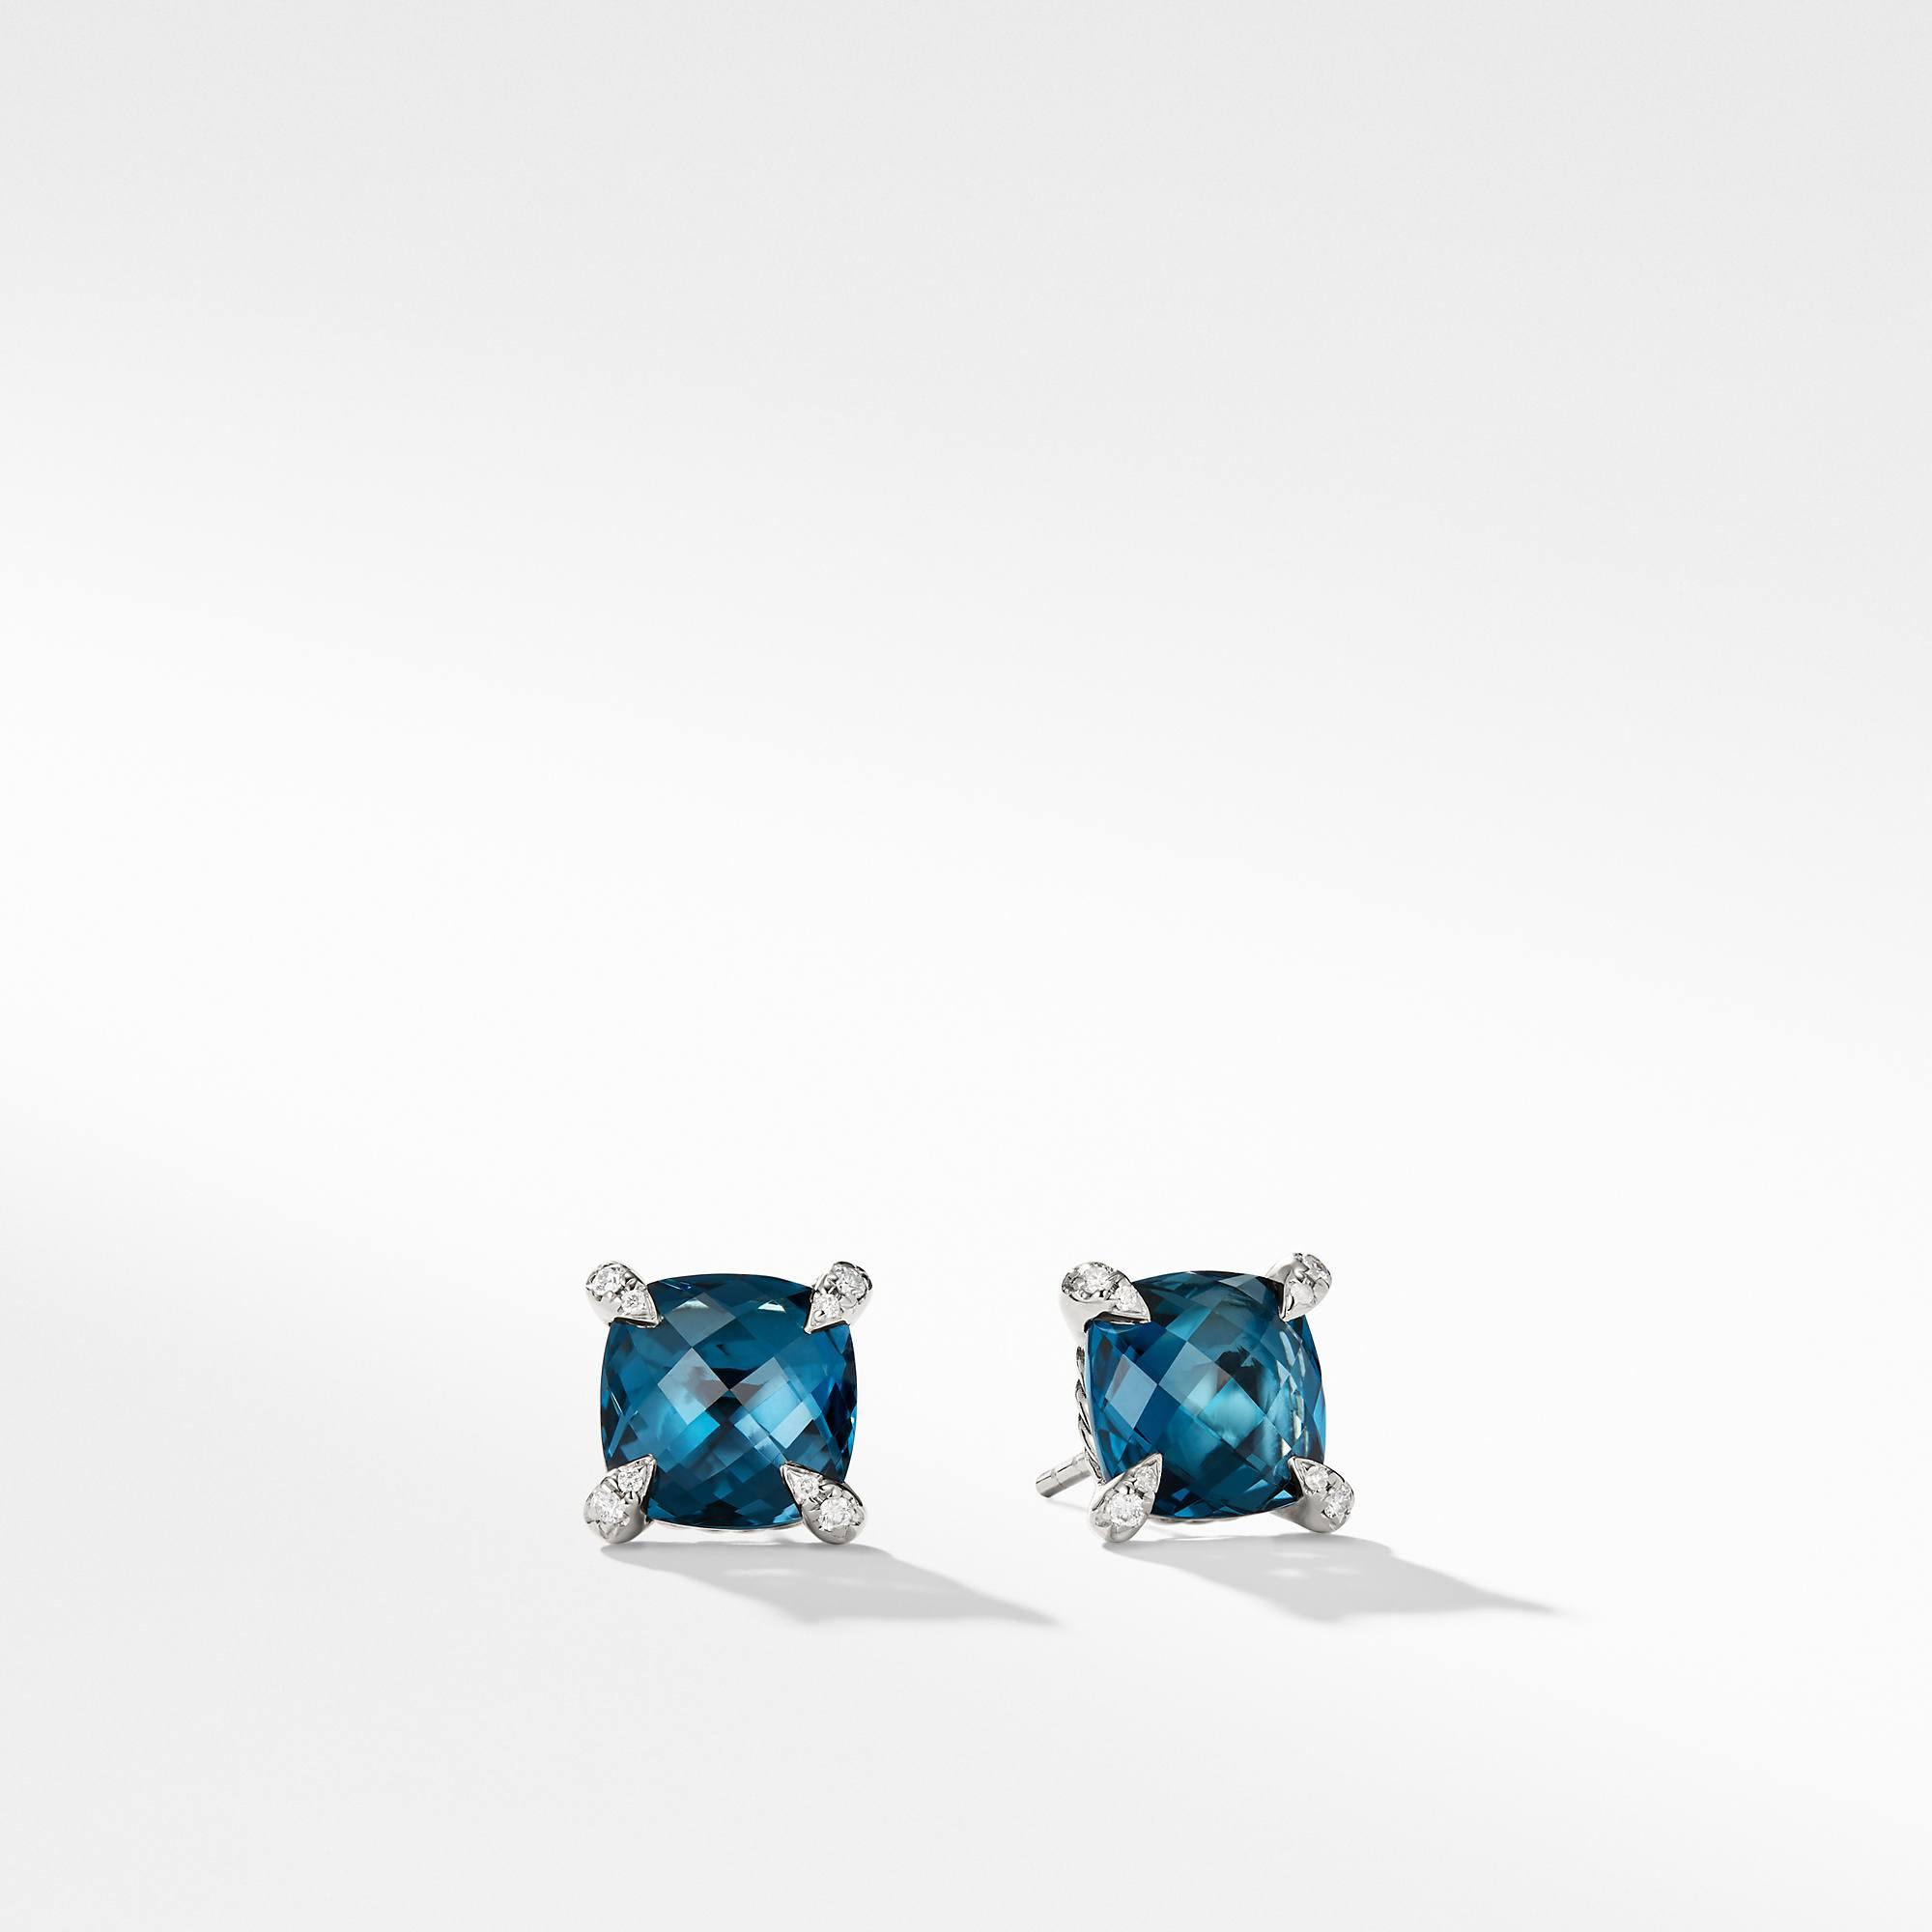 David Yurman Earrings with Hampton Blue Topaz and Diamonds